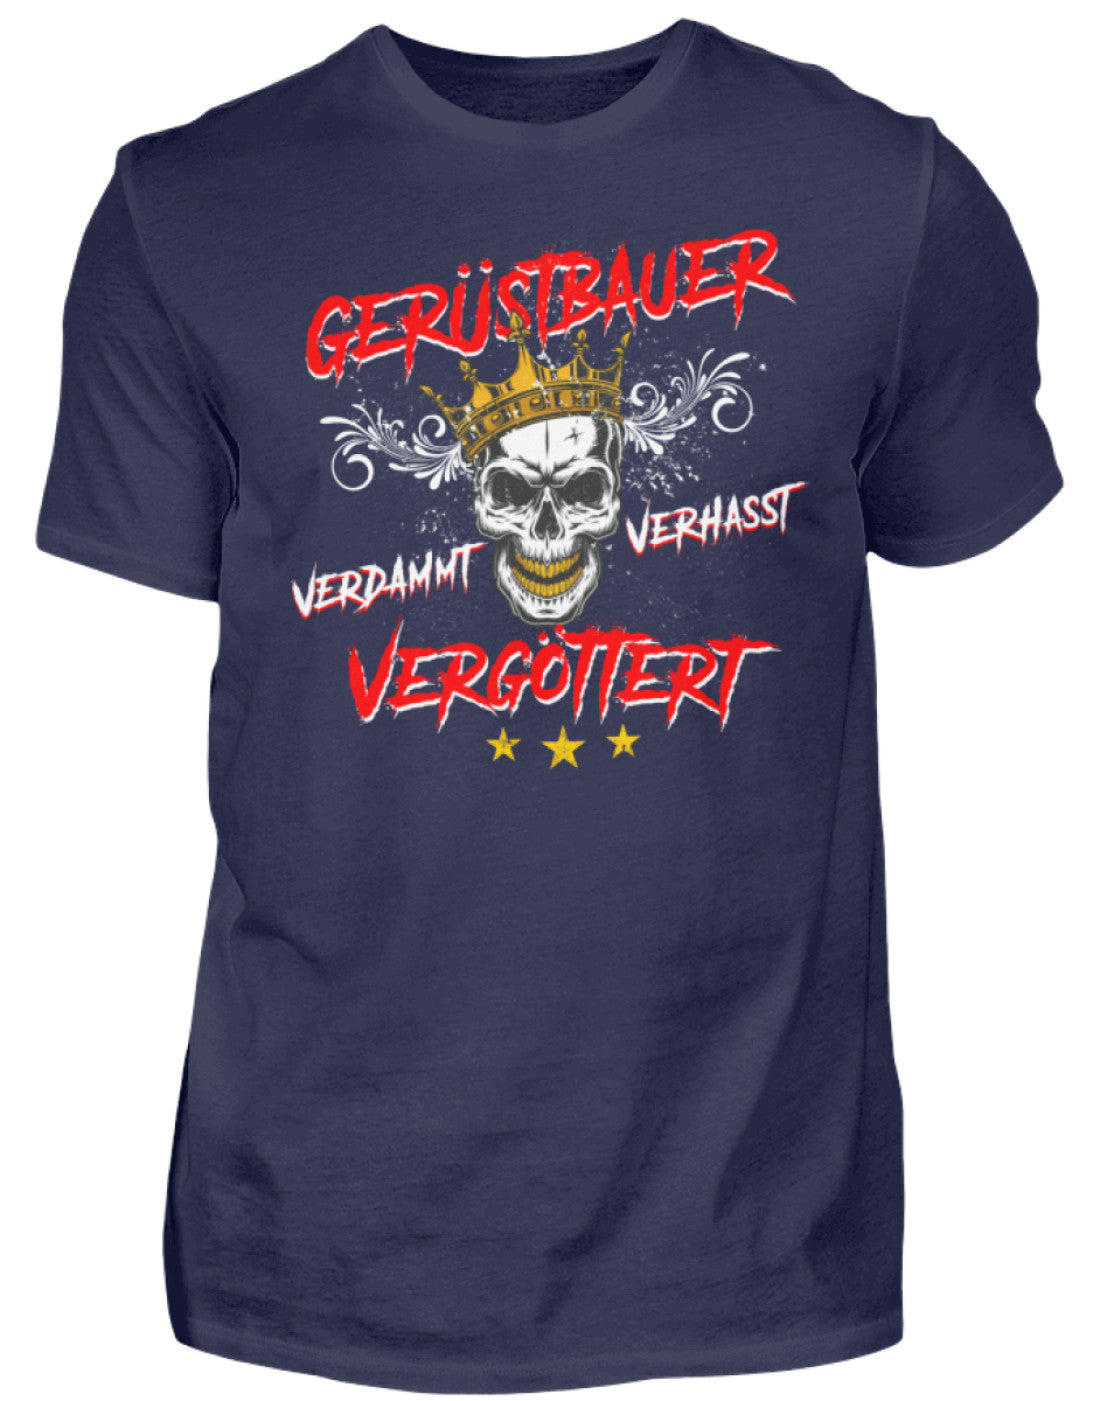 Gerüstbauer / Vergöttert €22.95 Gerüstbauer - Shop >>